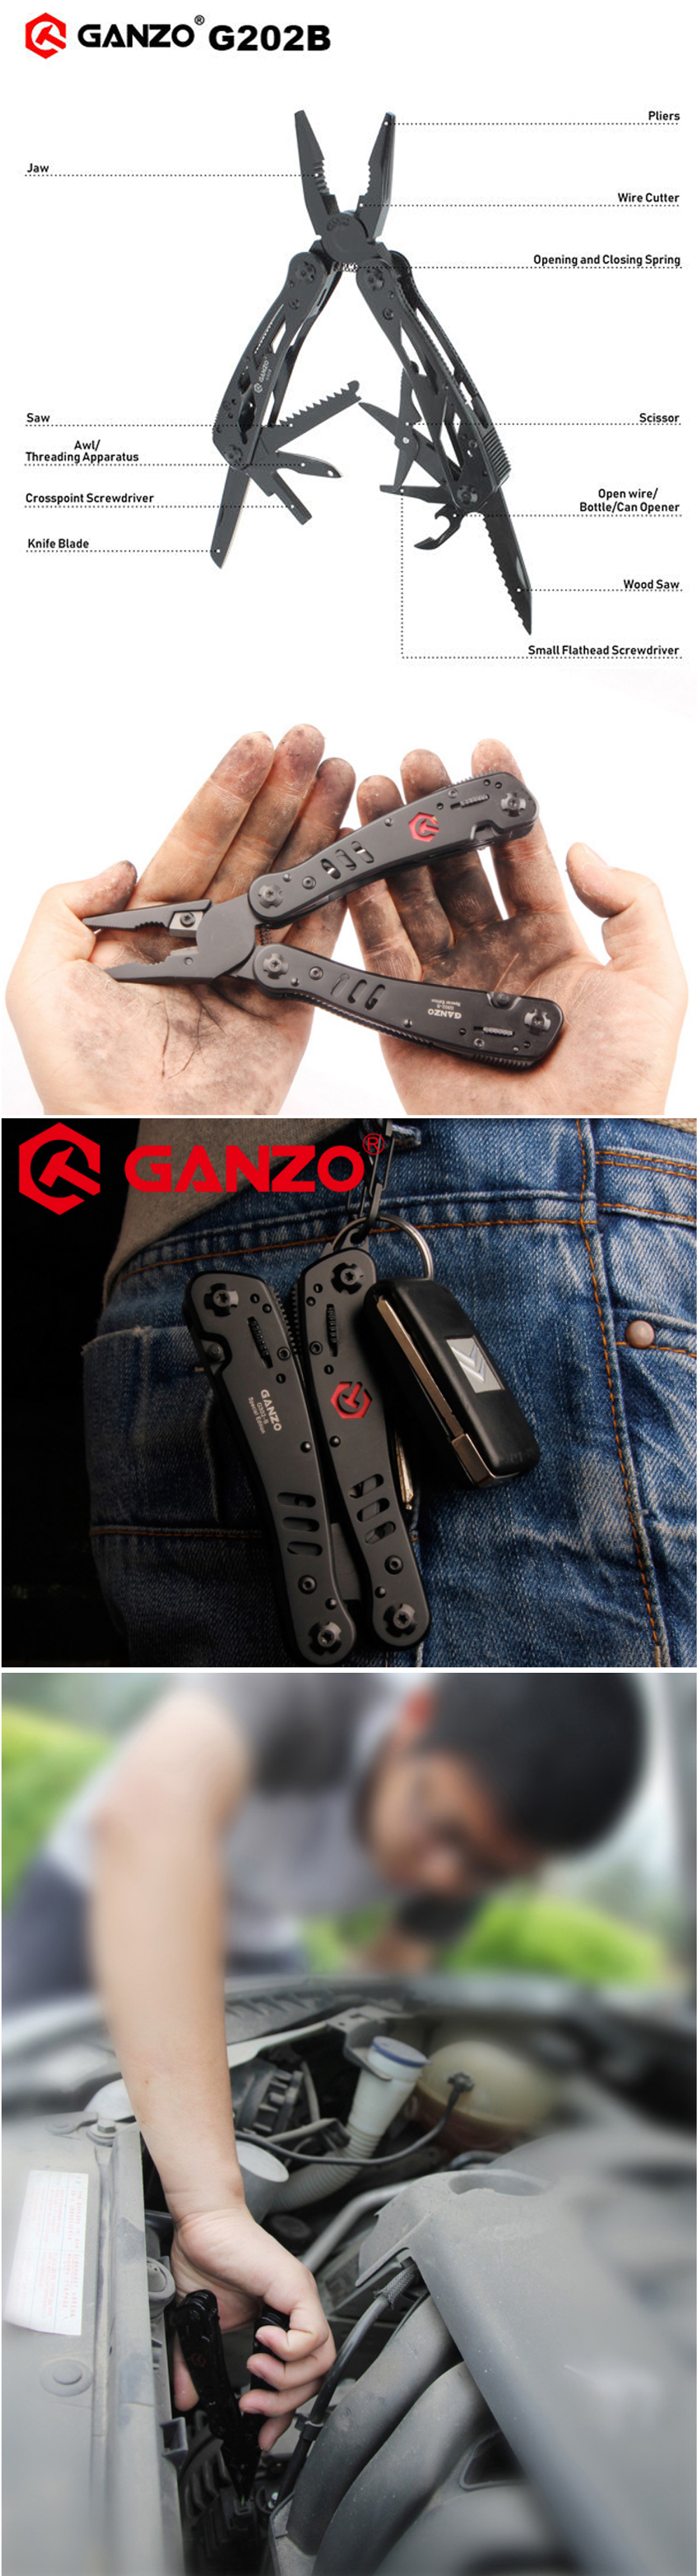 GANZO-G202B-24-in-1-EDC-Knife-Multi-tools-Set-Folding-Pliers-Knife-Pocket-Plier-Crimper-Wire-Cutter--1732908-1